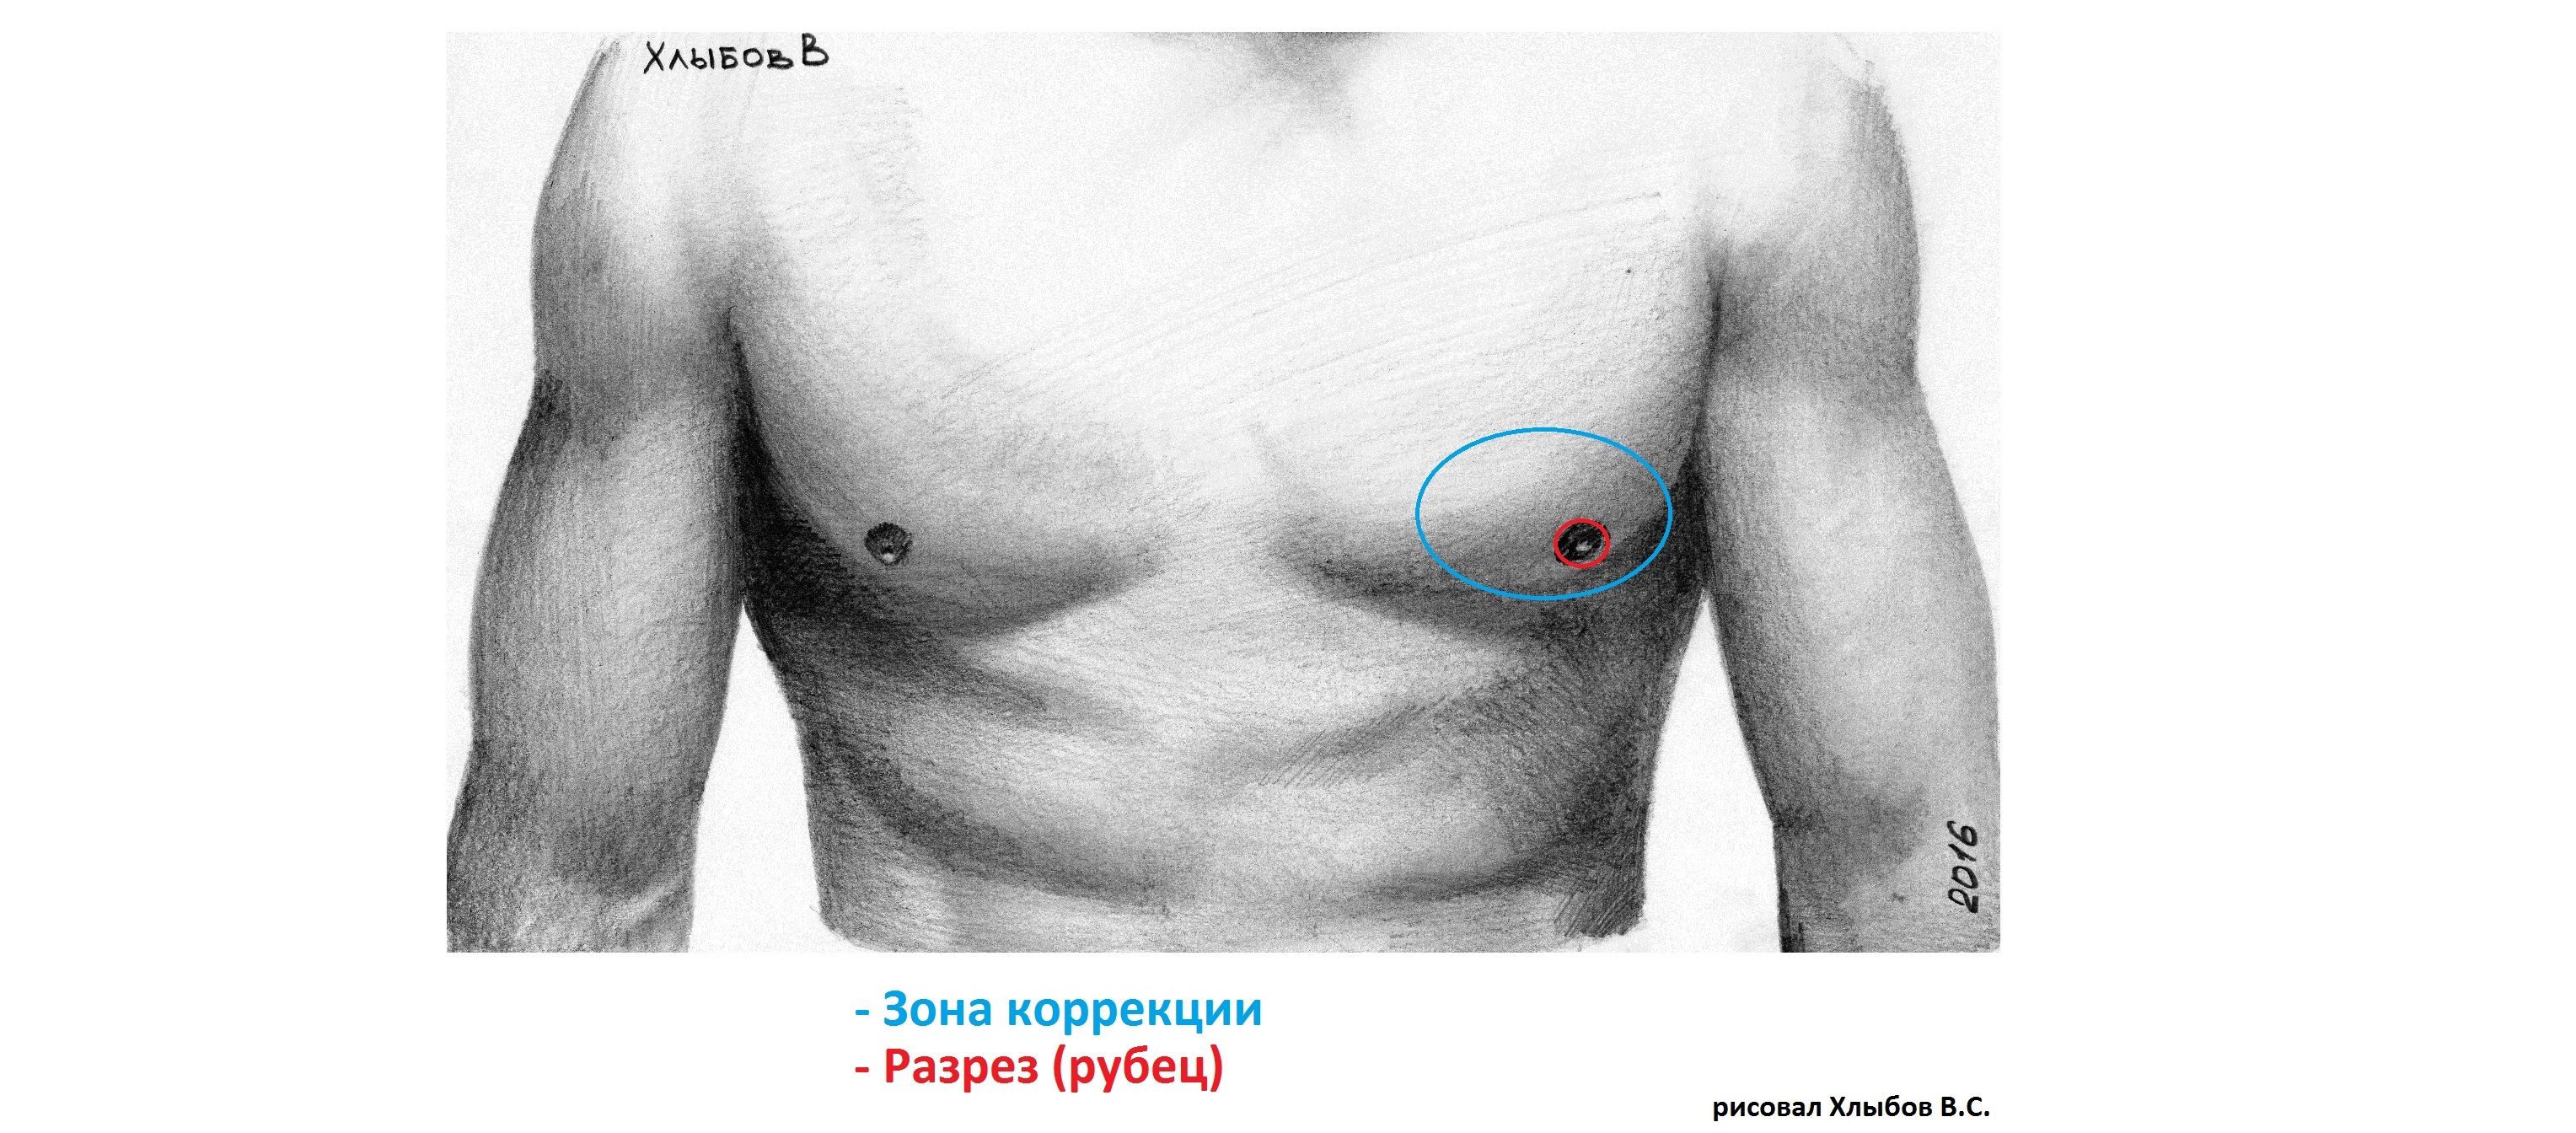 шишка в правой груди у мужчин фото 111